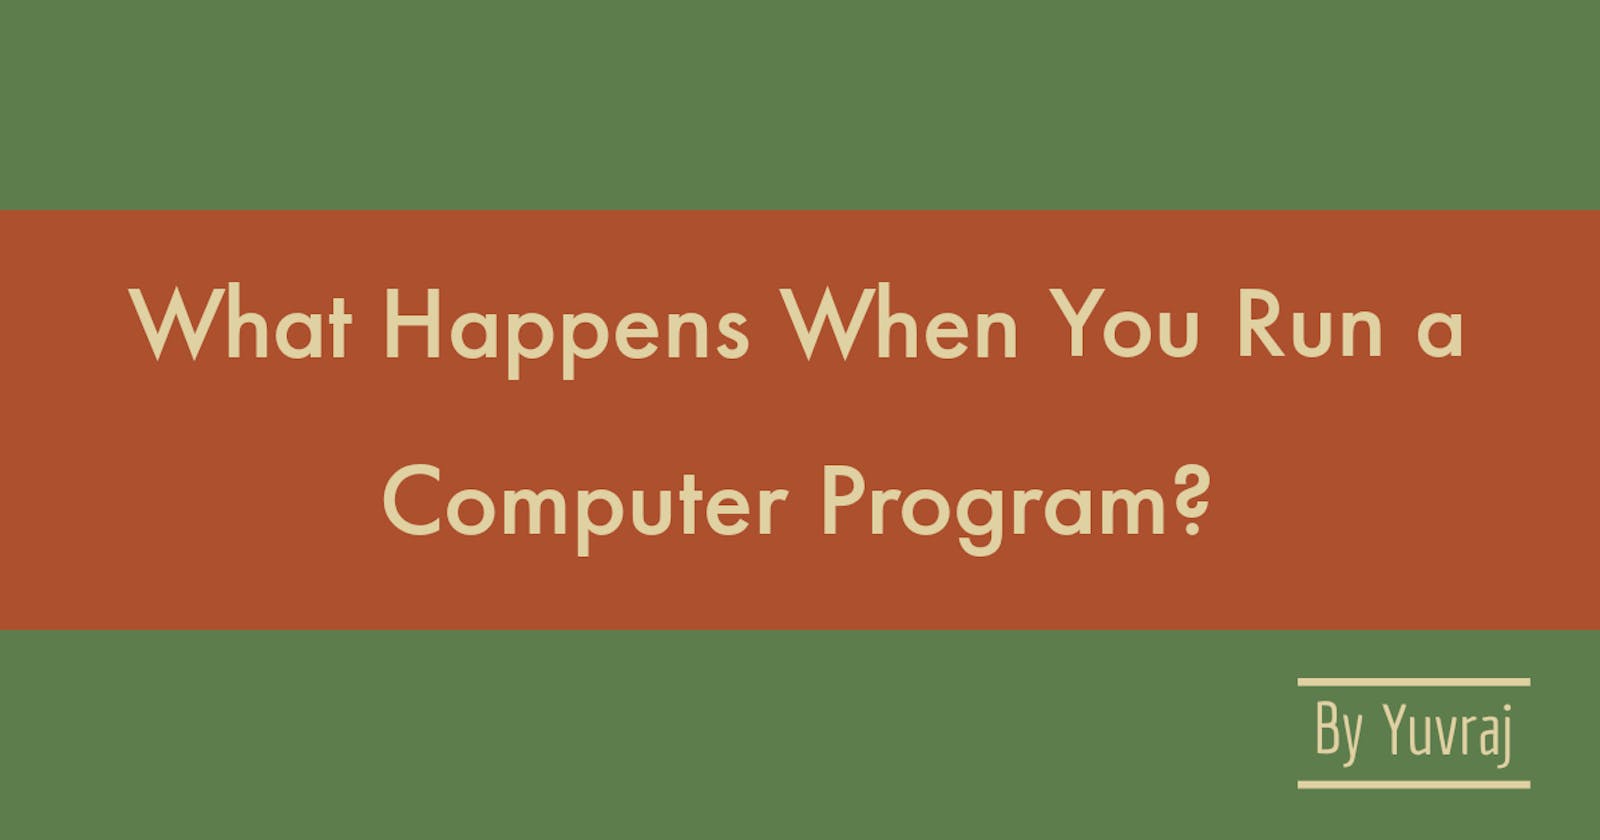 What Happens When You Run a Computer Program?